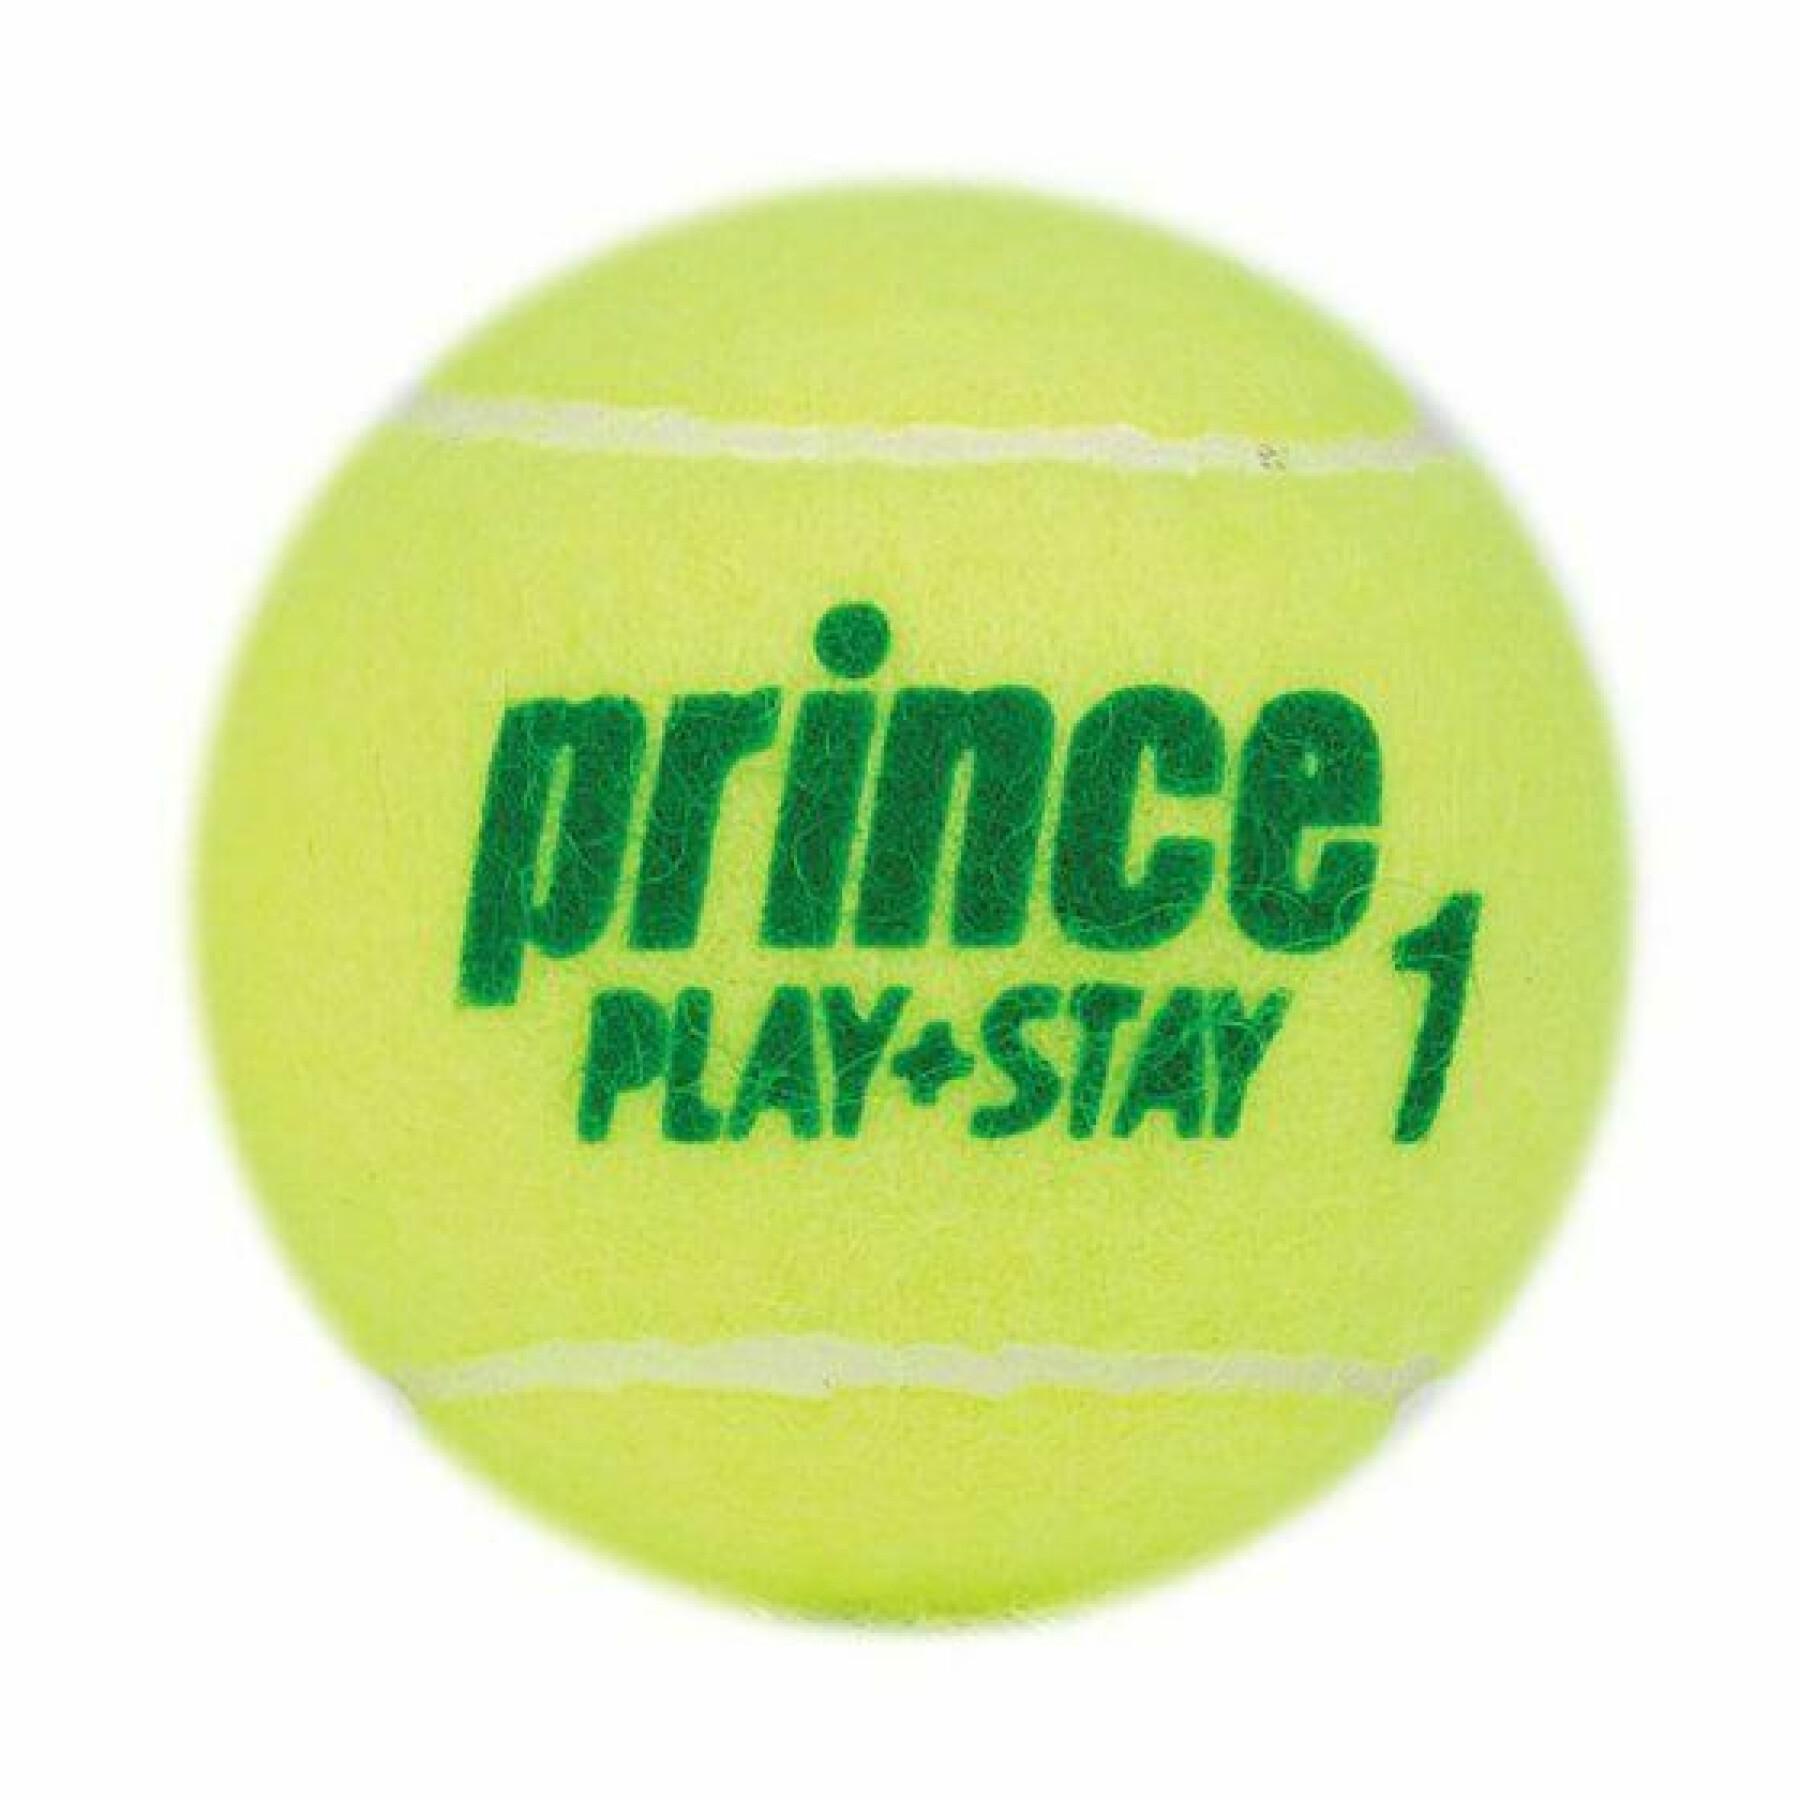 Tubo de 3 pelotas de tenis Prince Play & Stay - stage 1